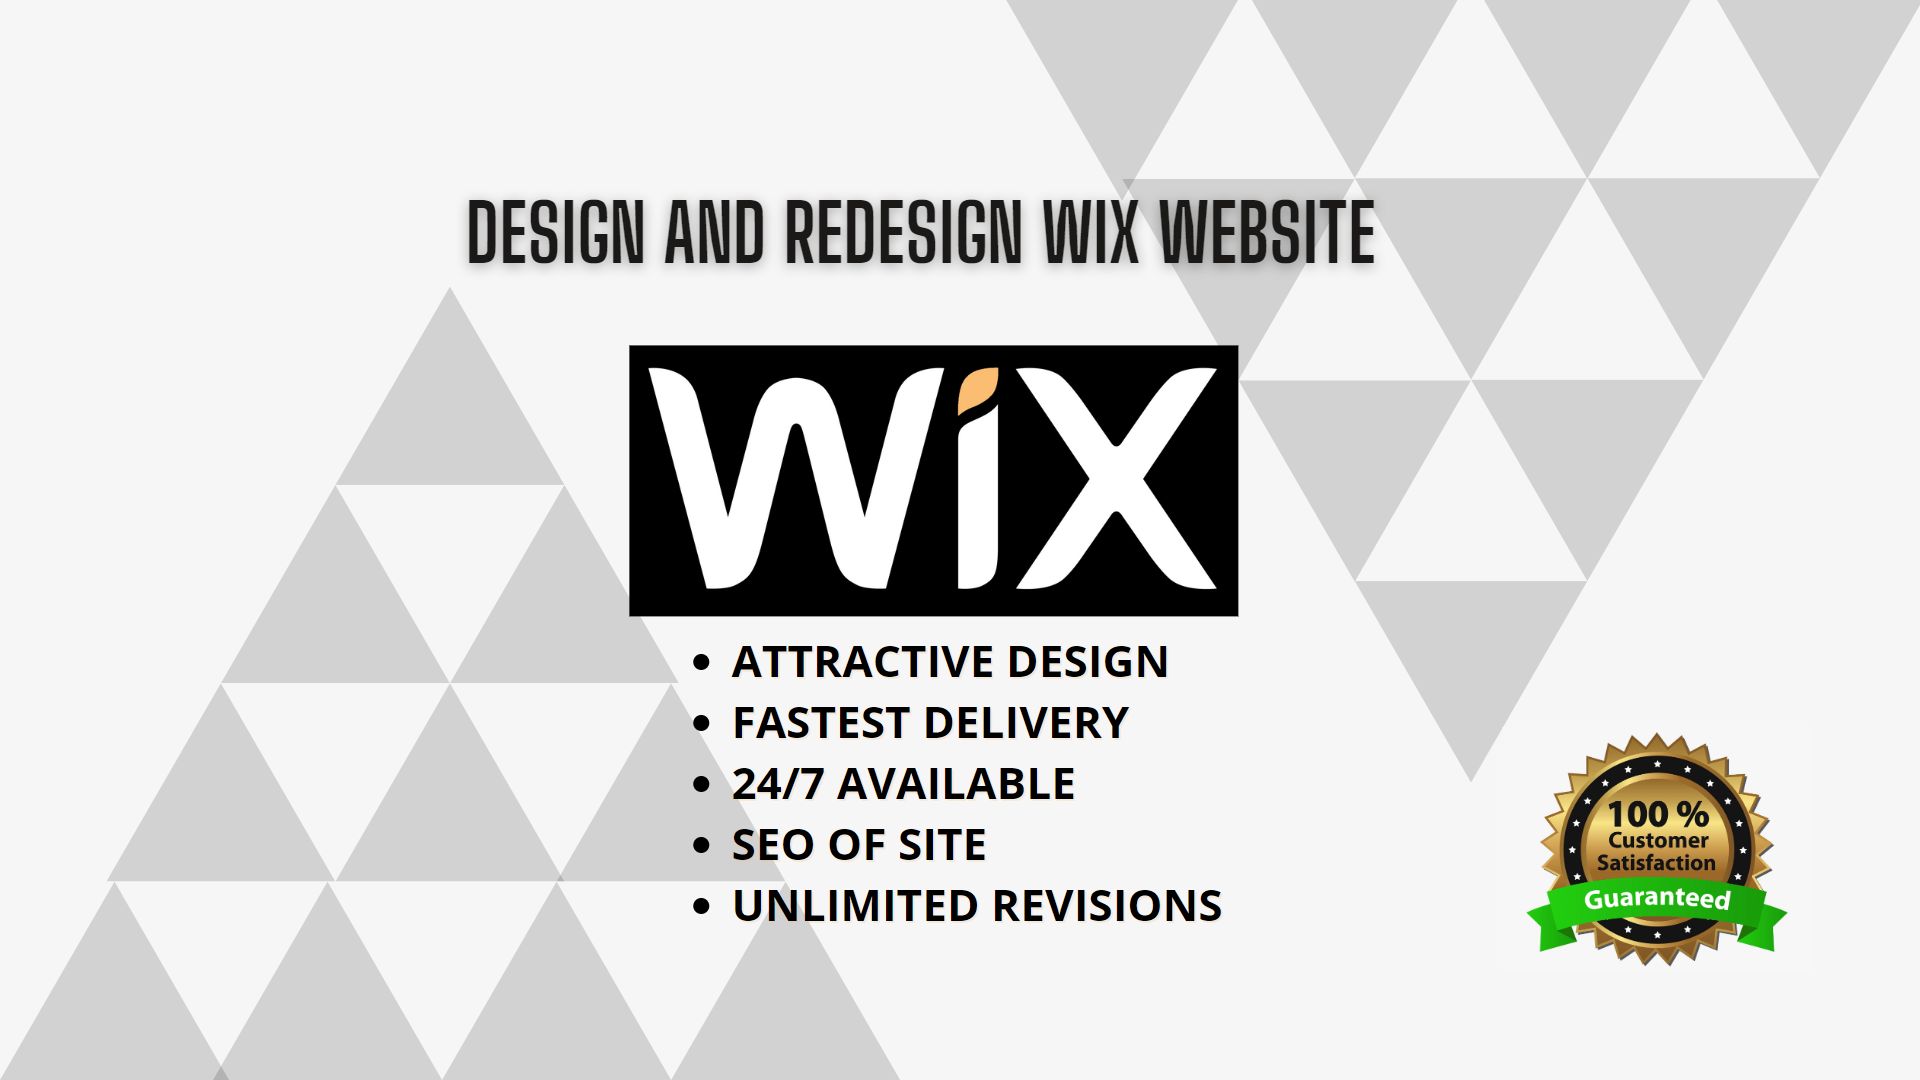 174267Wix webiste designing.